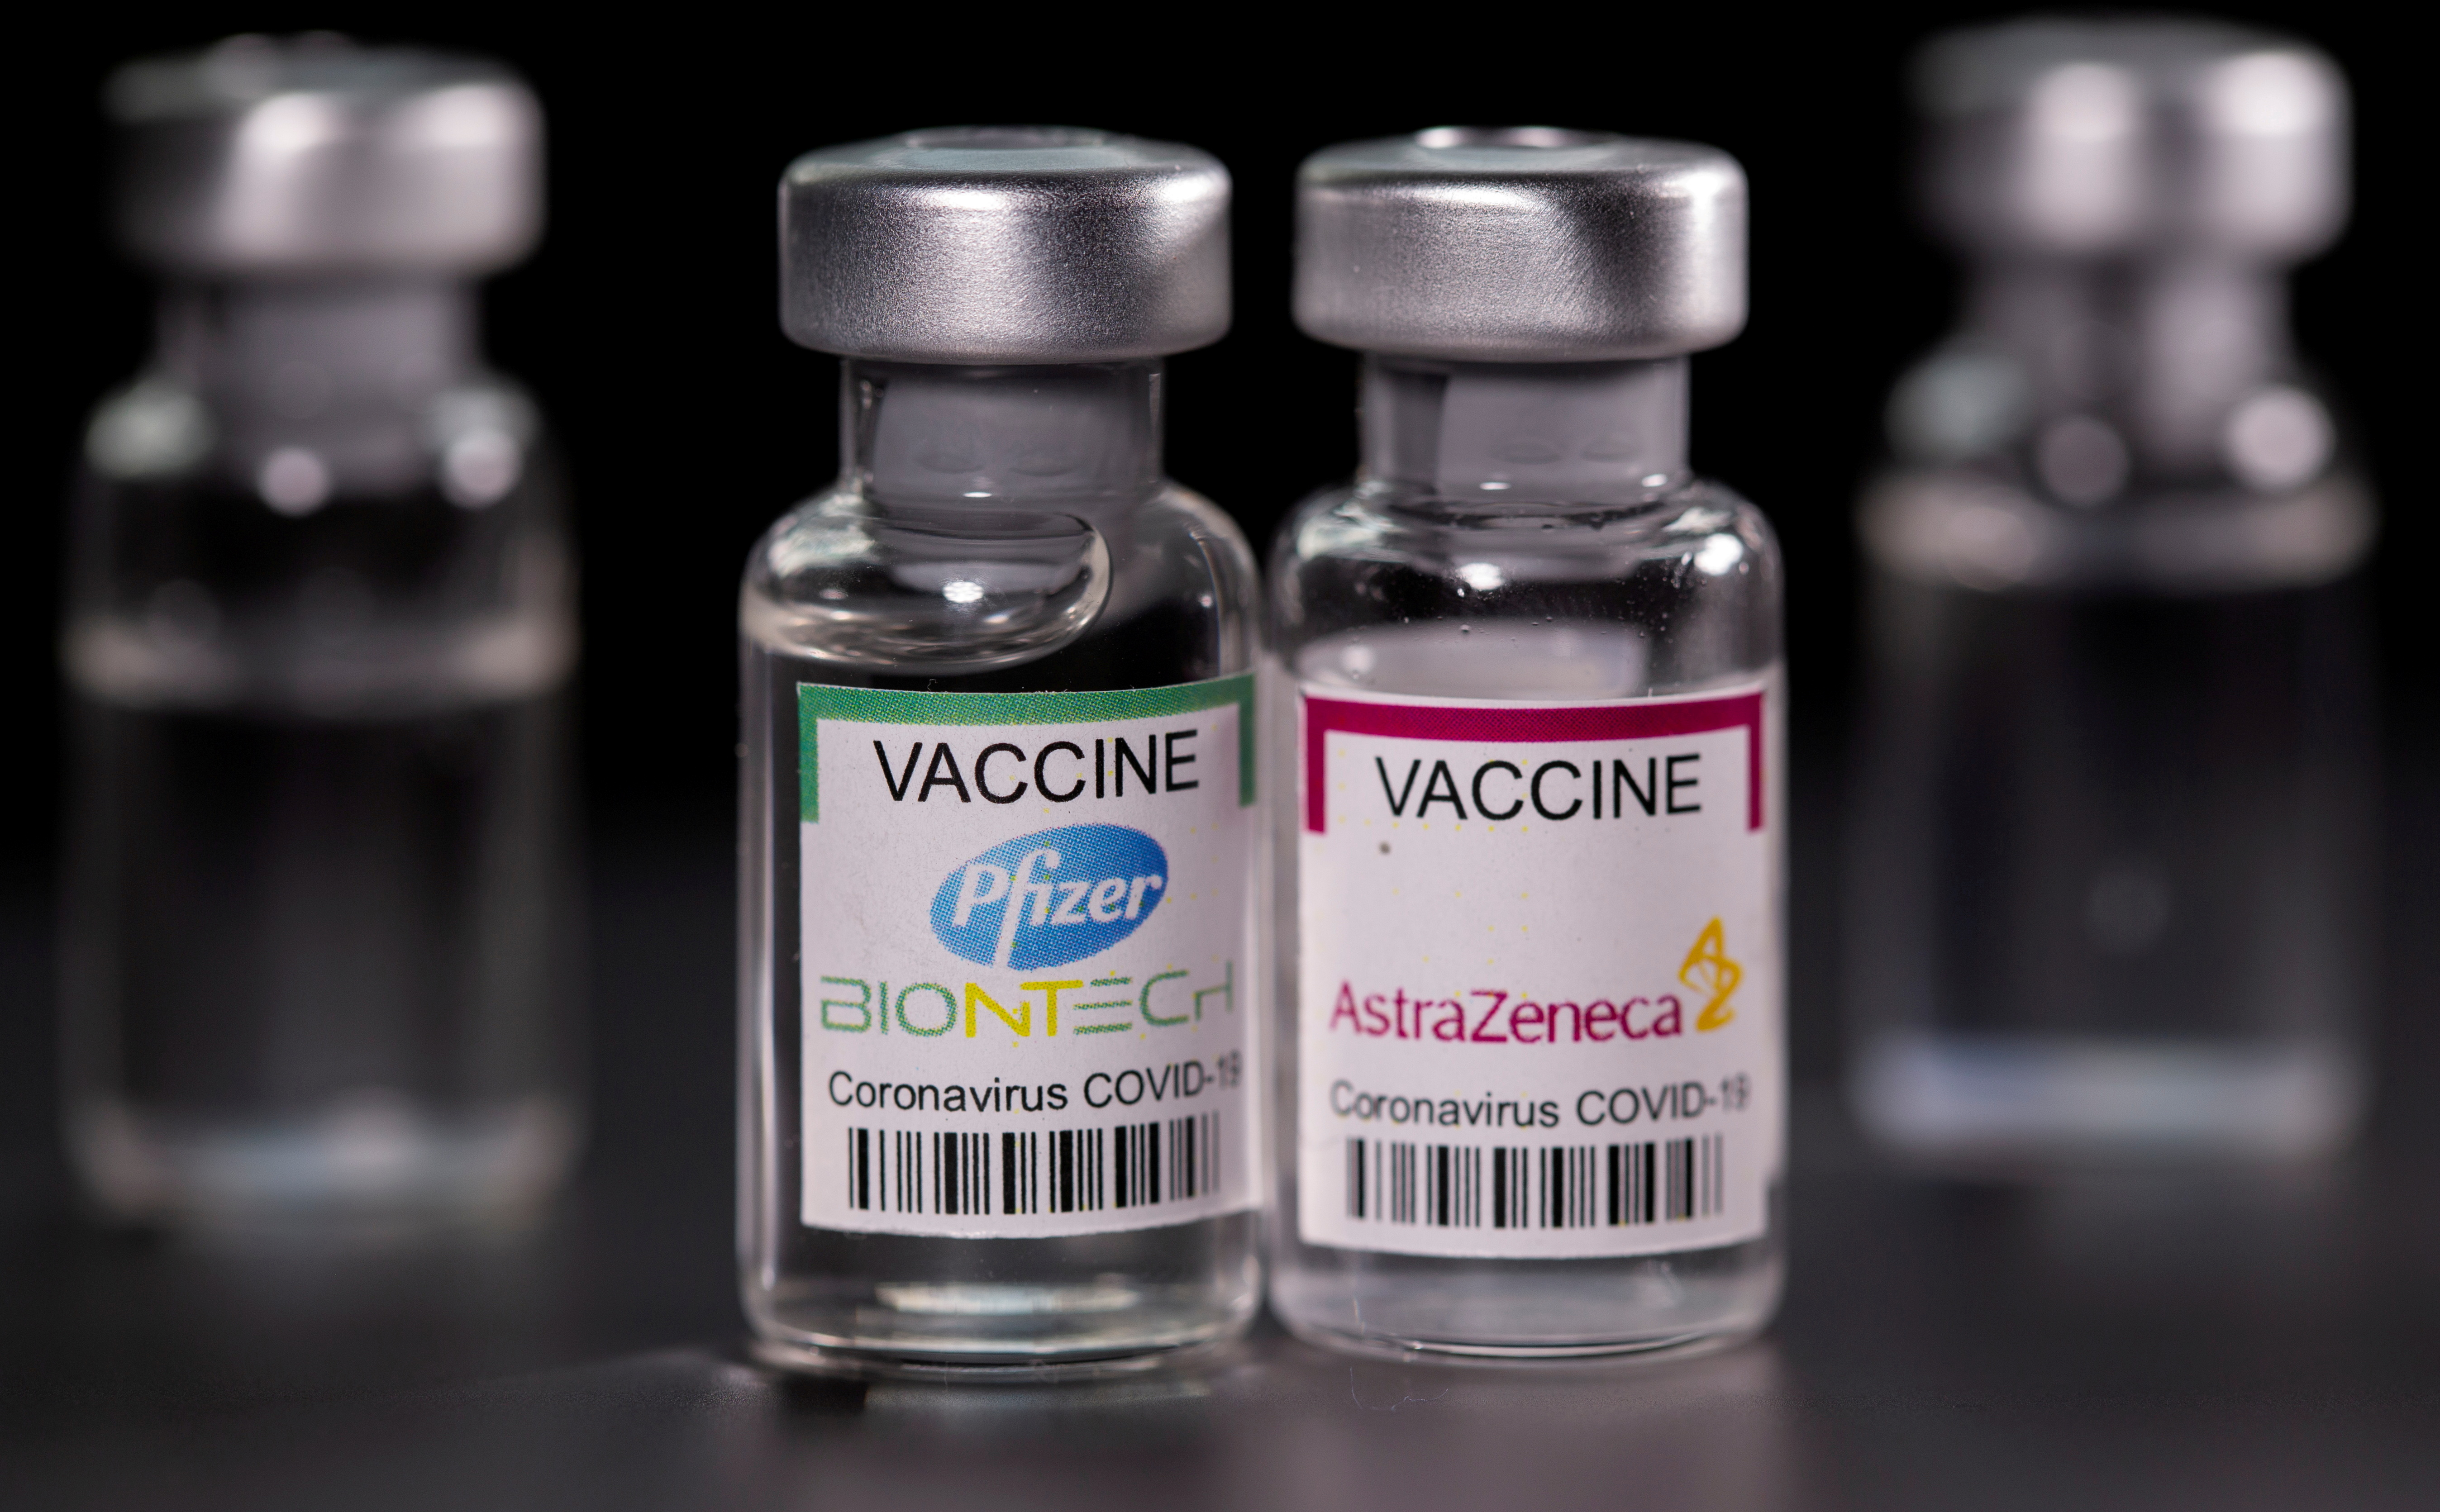 Az vaccine vs pfizer